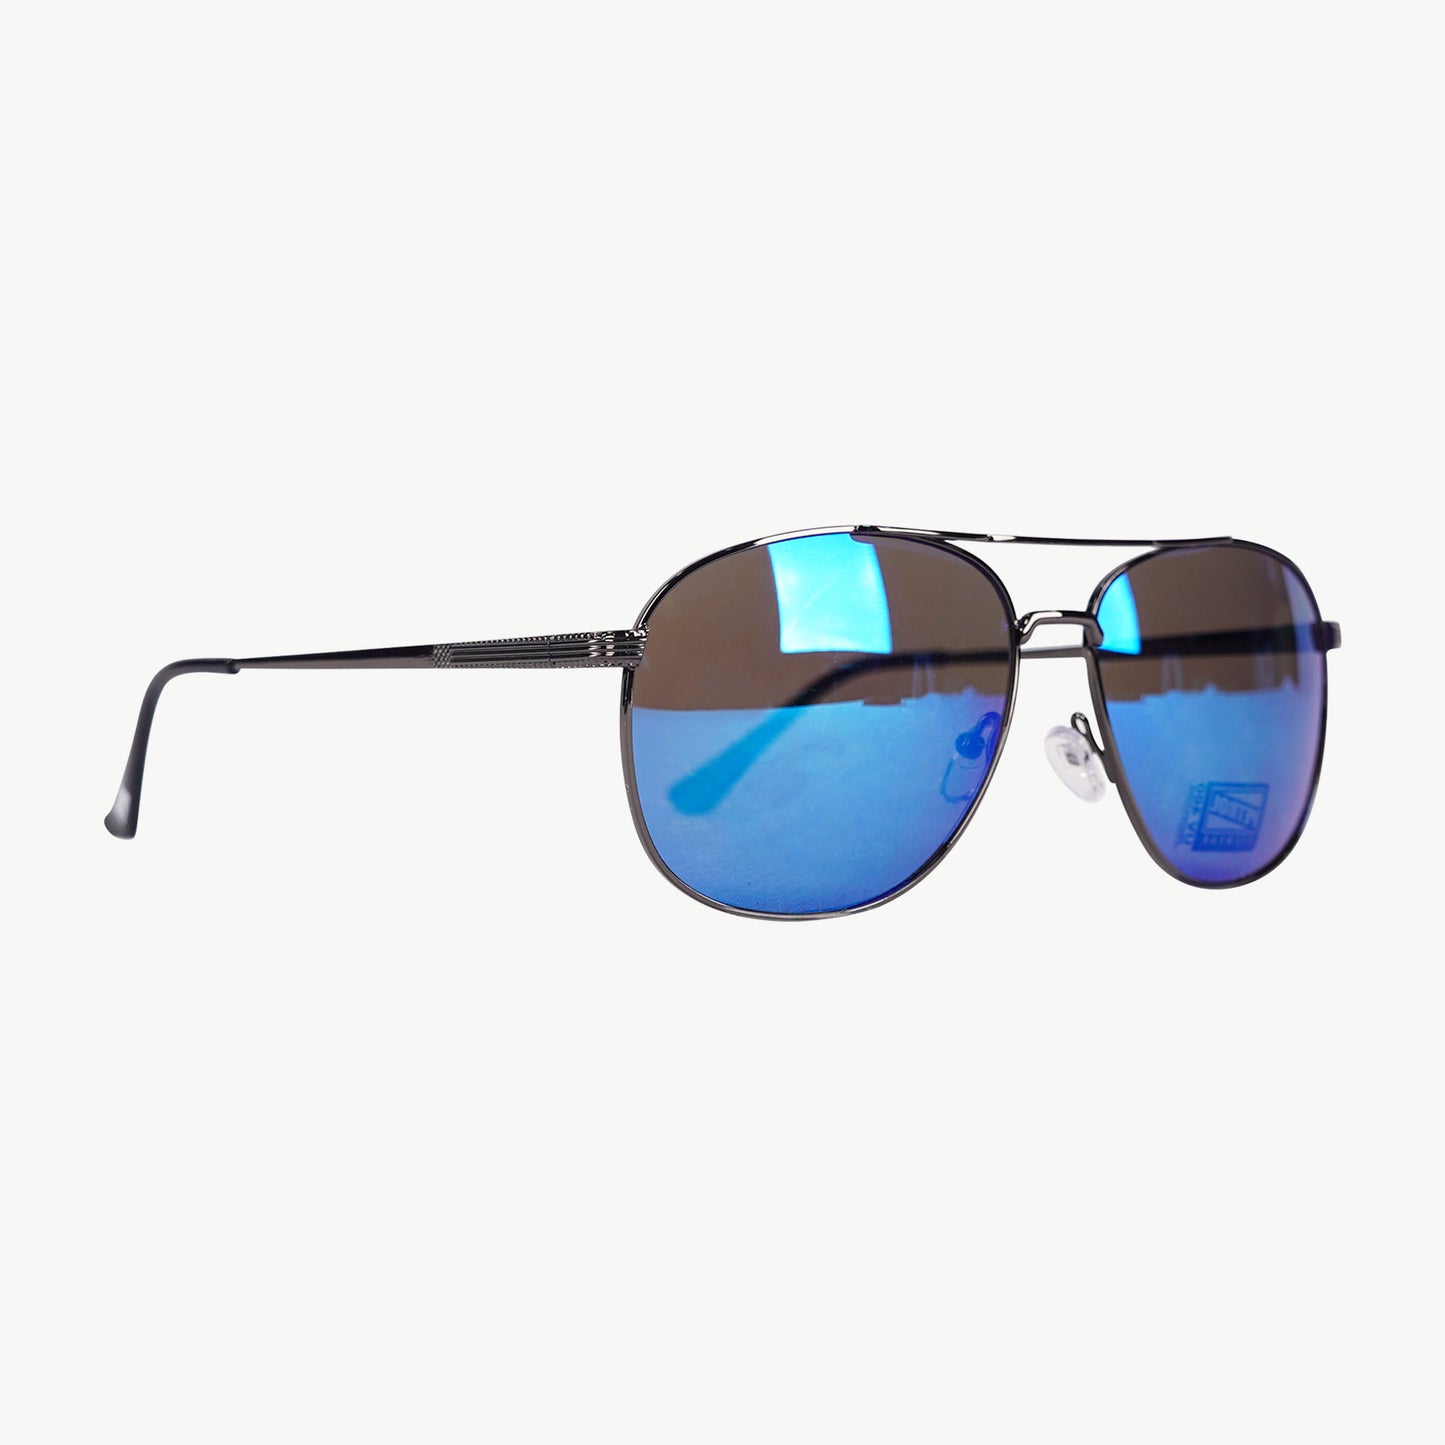 Petrol Men's Accessories Eye wear Basic Sunglasses for Men's High quality eyewear 153391 (Ice Blue)